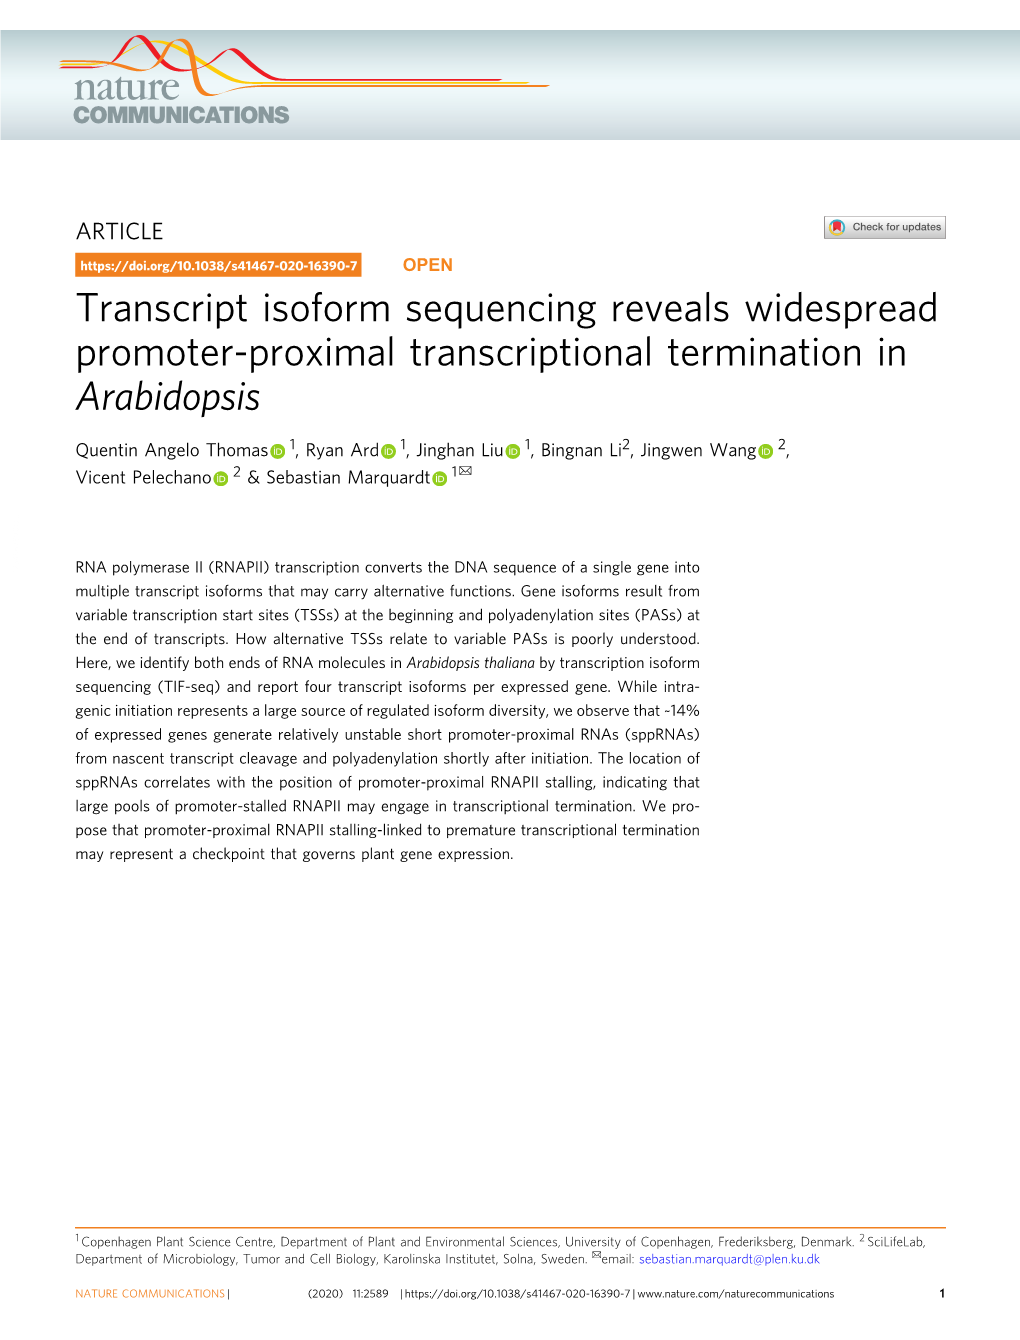 Transcript Isoform Sequencing Reveals Widespread Promoter-Proximal Transcriptional Termination in Arabidopsis